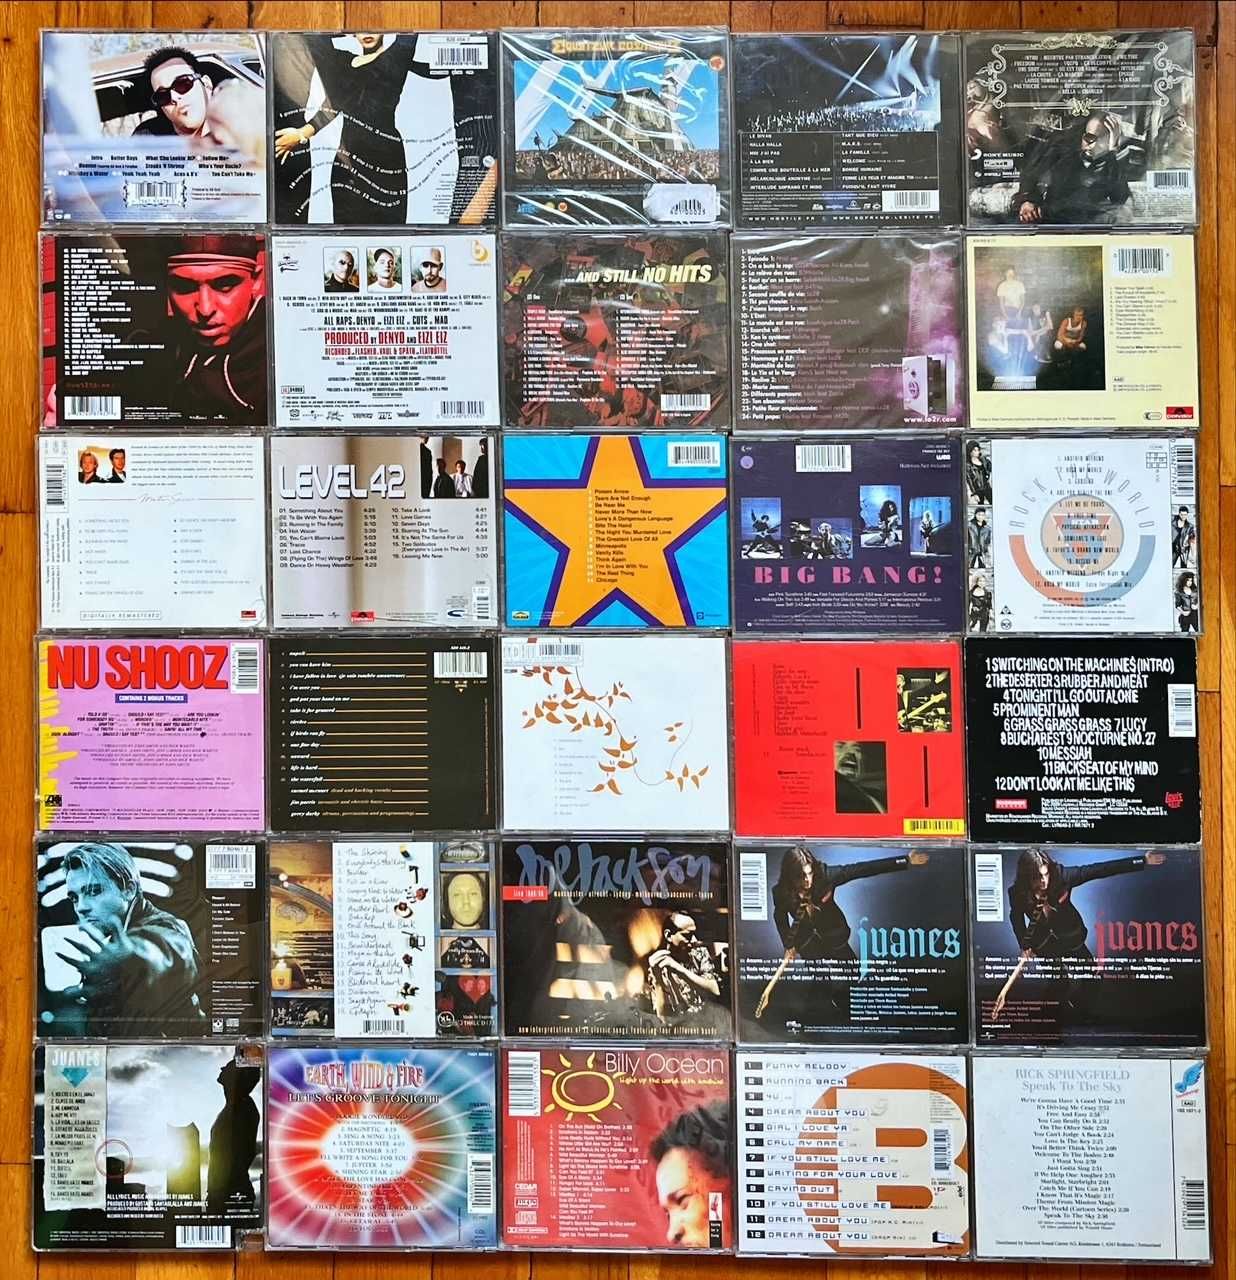 Lot 3 CD orig. rap&pop: Eminem, OutKast, Smith, Level 42, Juanes, Rieu